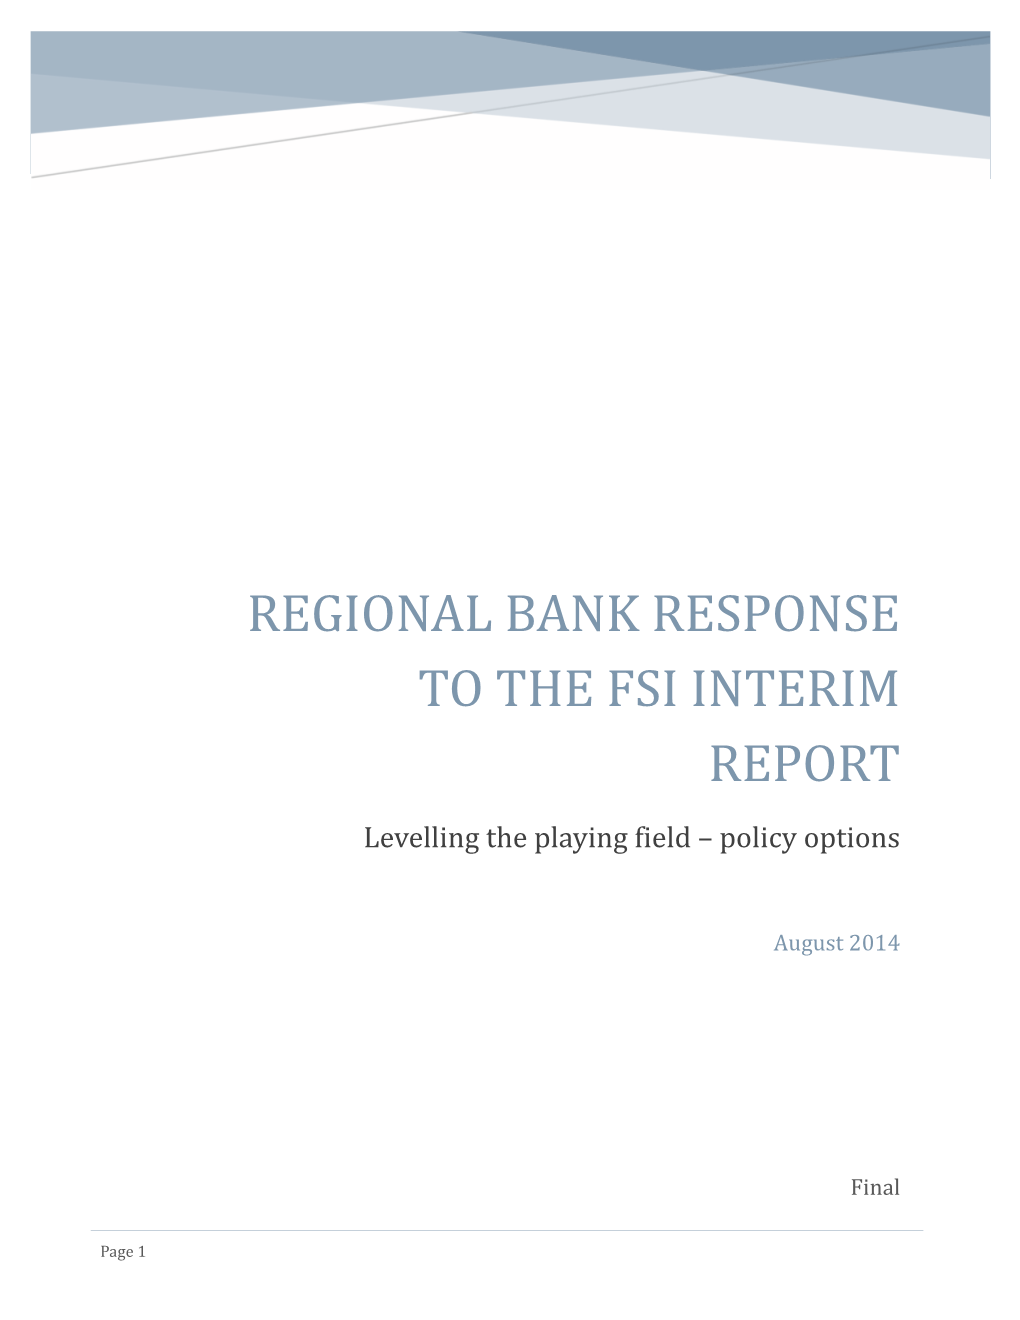 Regional Banks' FSI Interim Report Submission